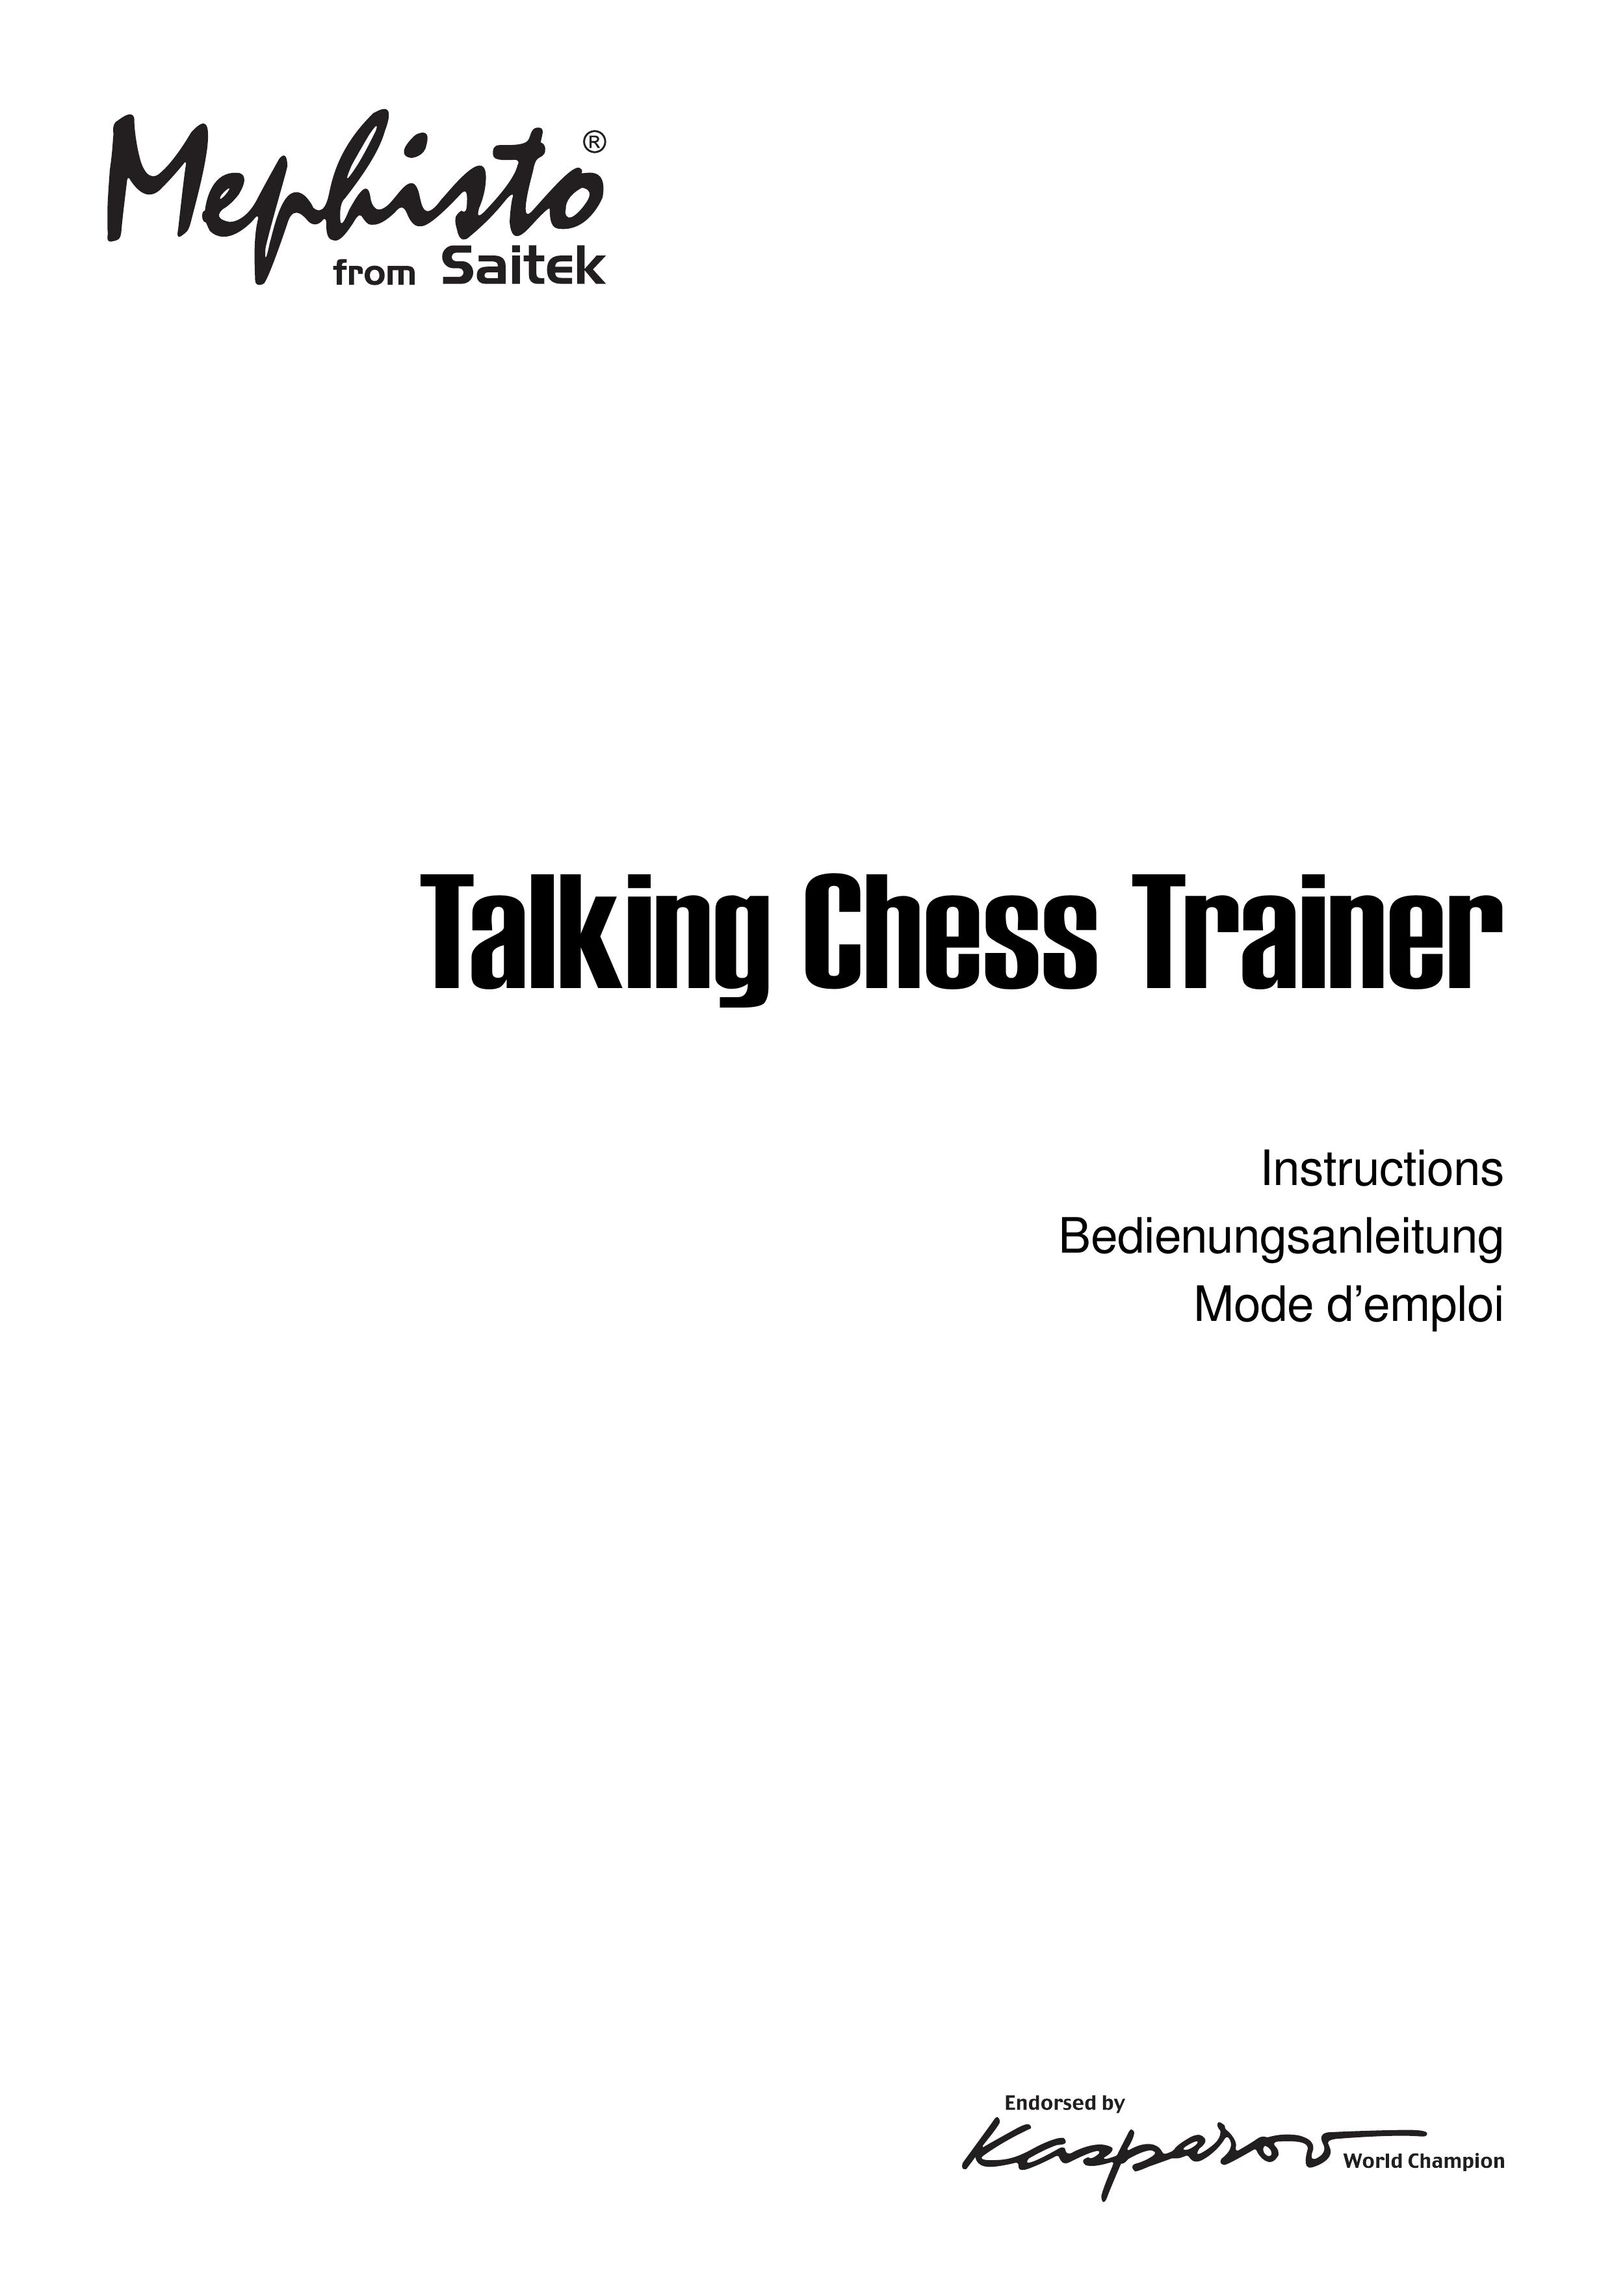 Saitek Talking Chess Trainer Games User Manual